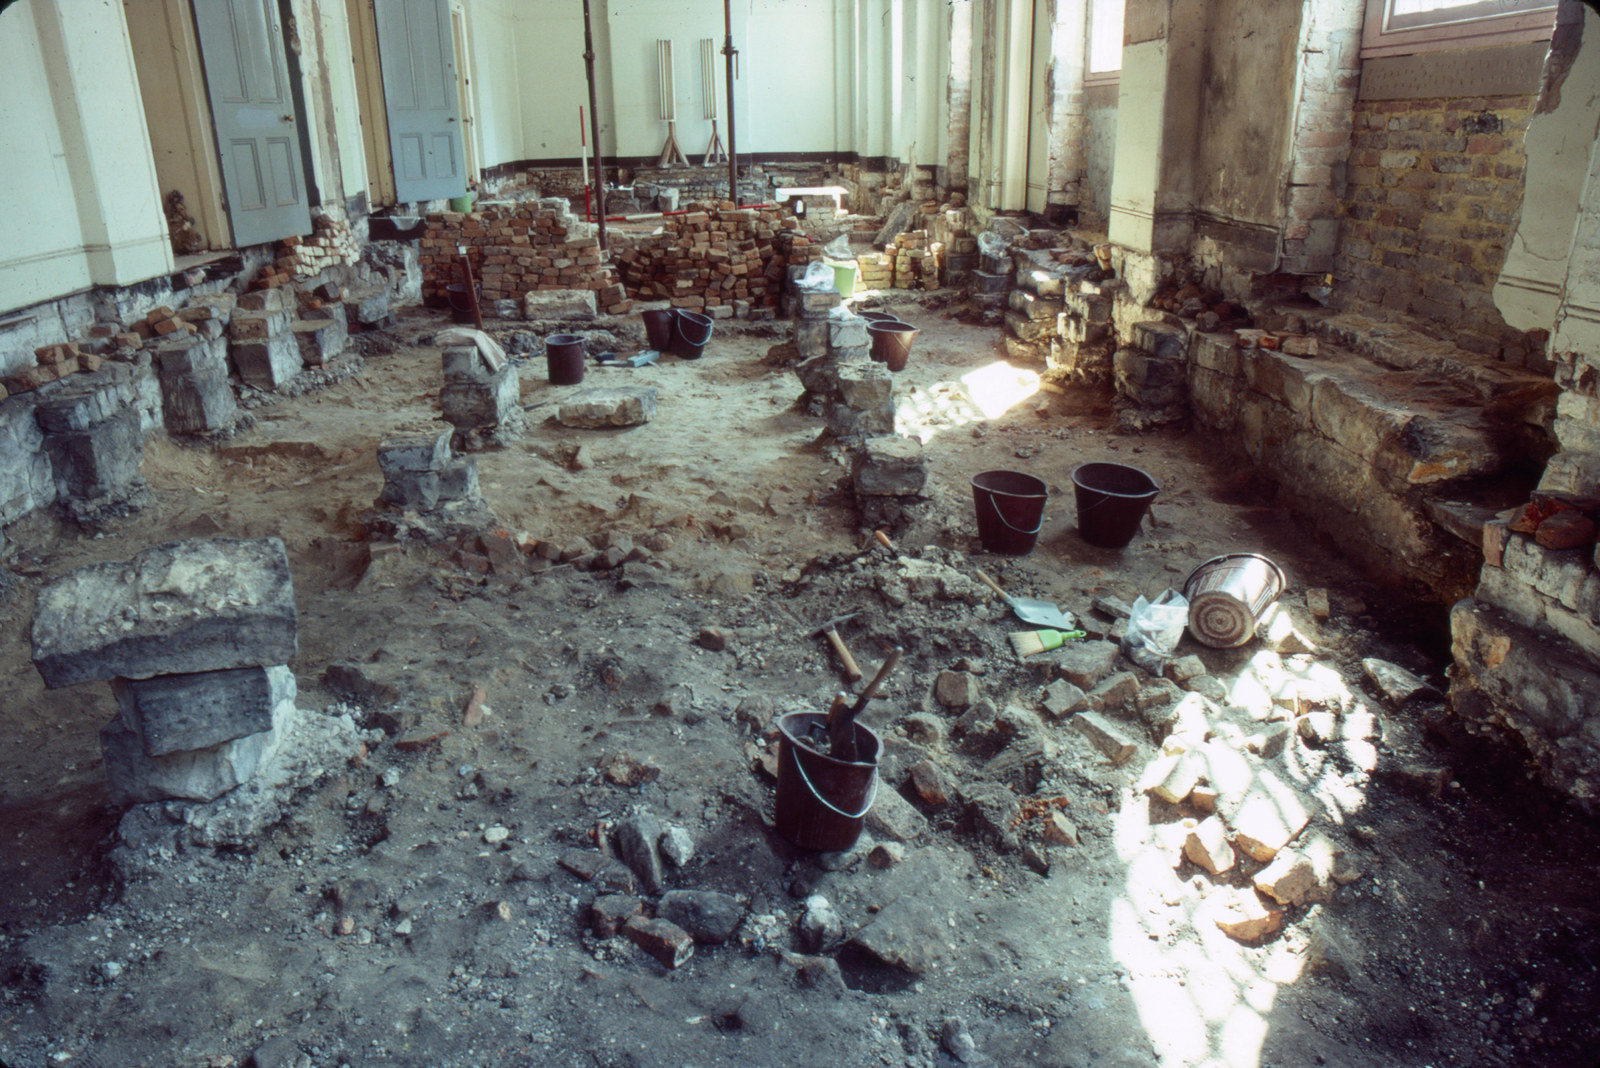 North-east ground floor room of Hyde Park Barracks during excavation, looking west, 1980-81.